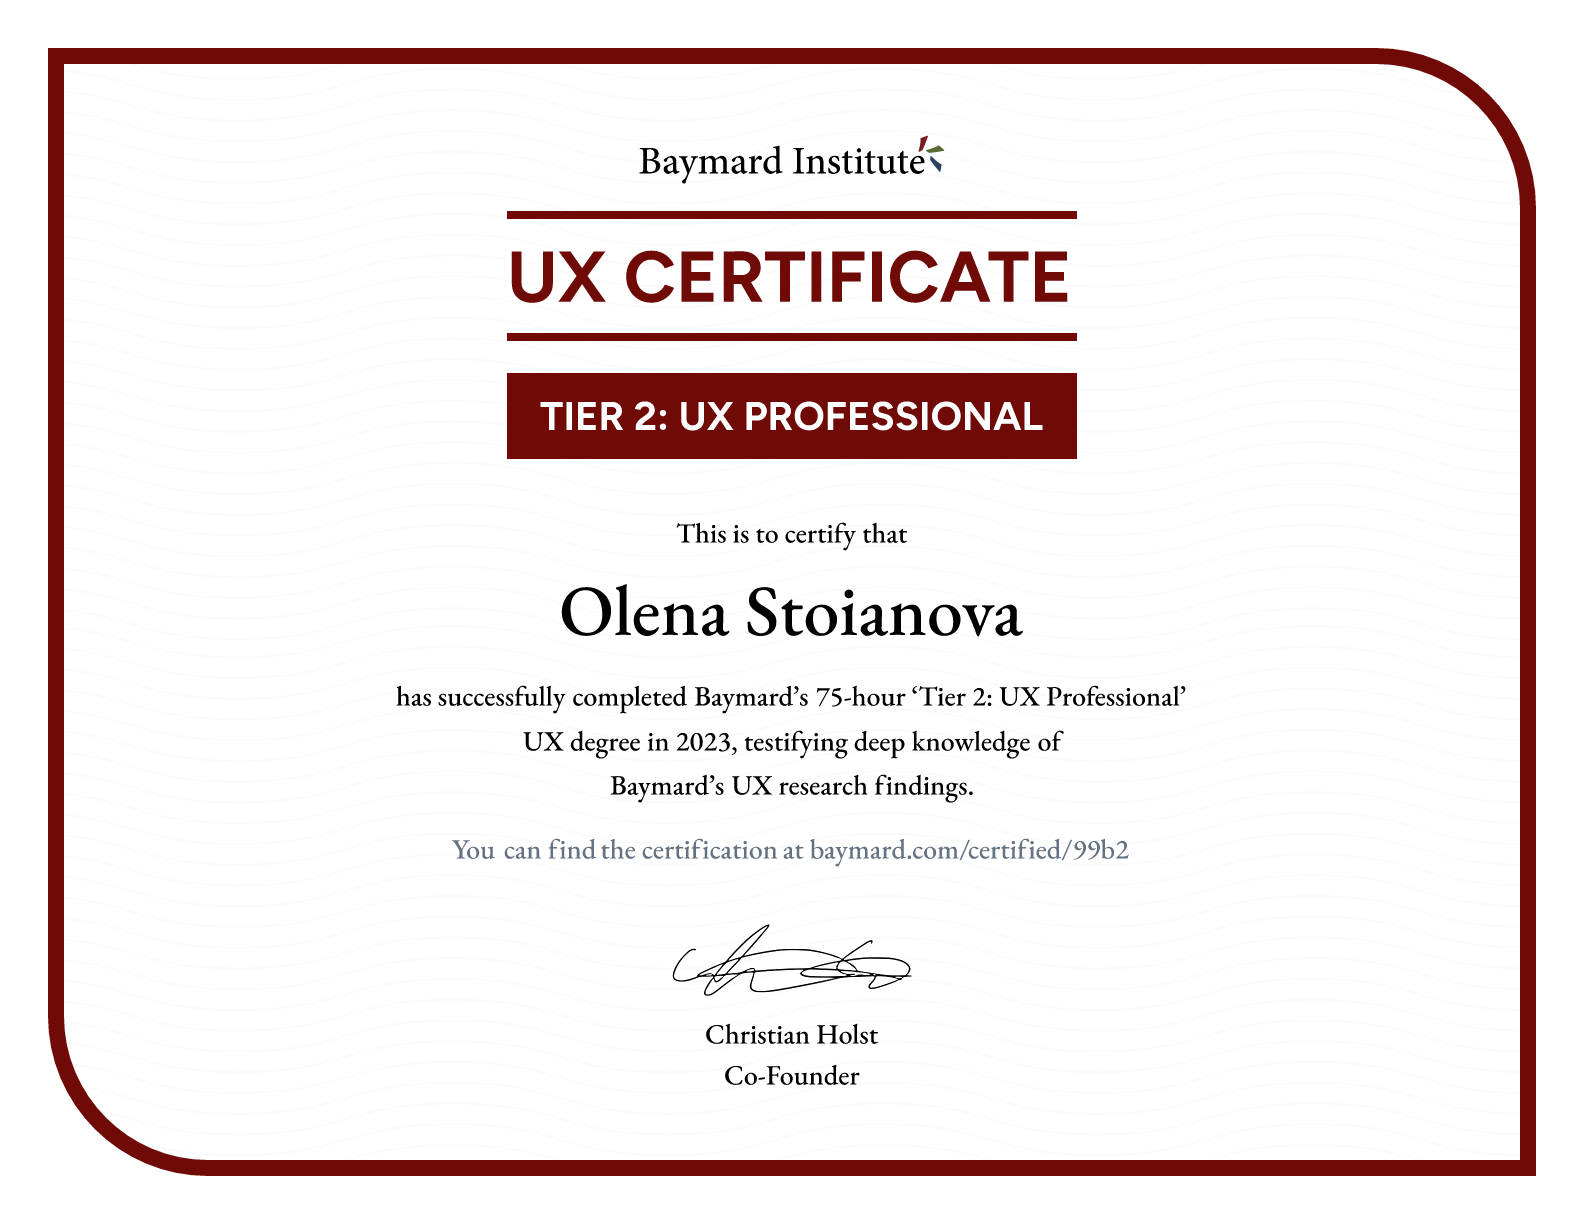 Olena Stoianova’s certificate